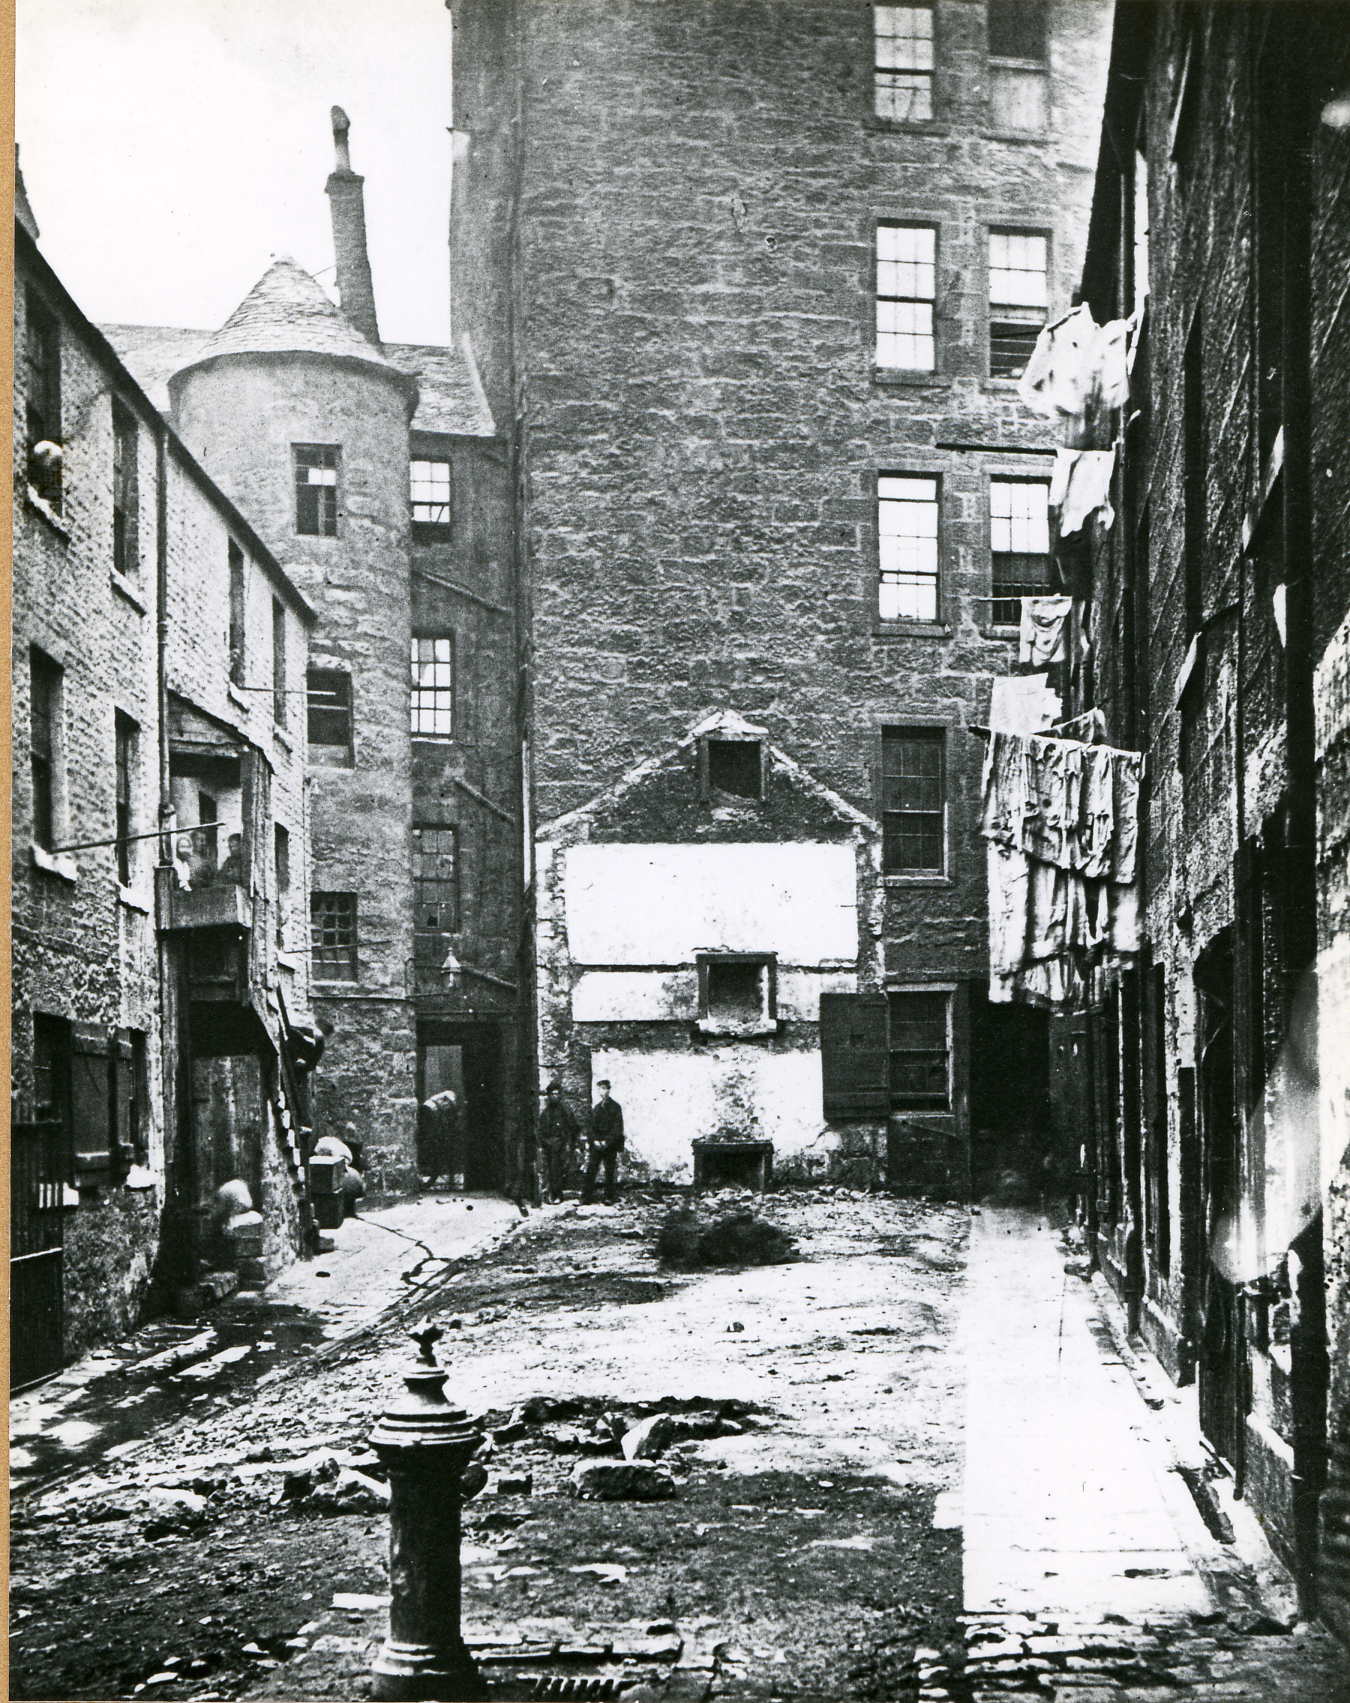 A photograph from Thomas Annan’s Slums of Glasgow album